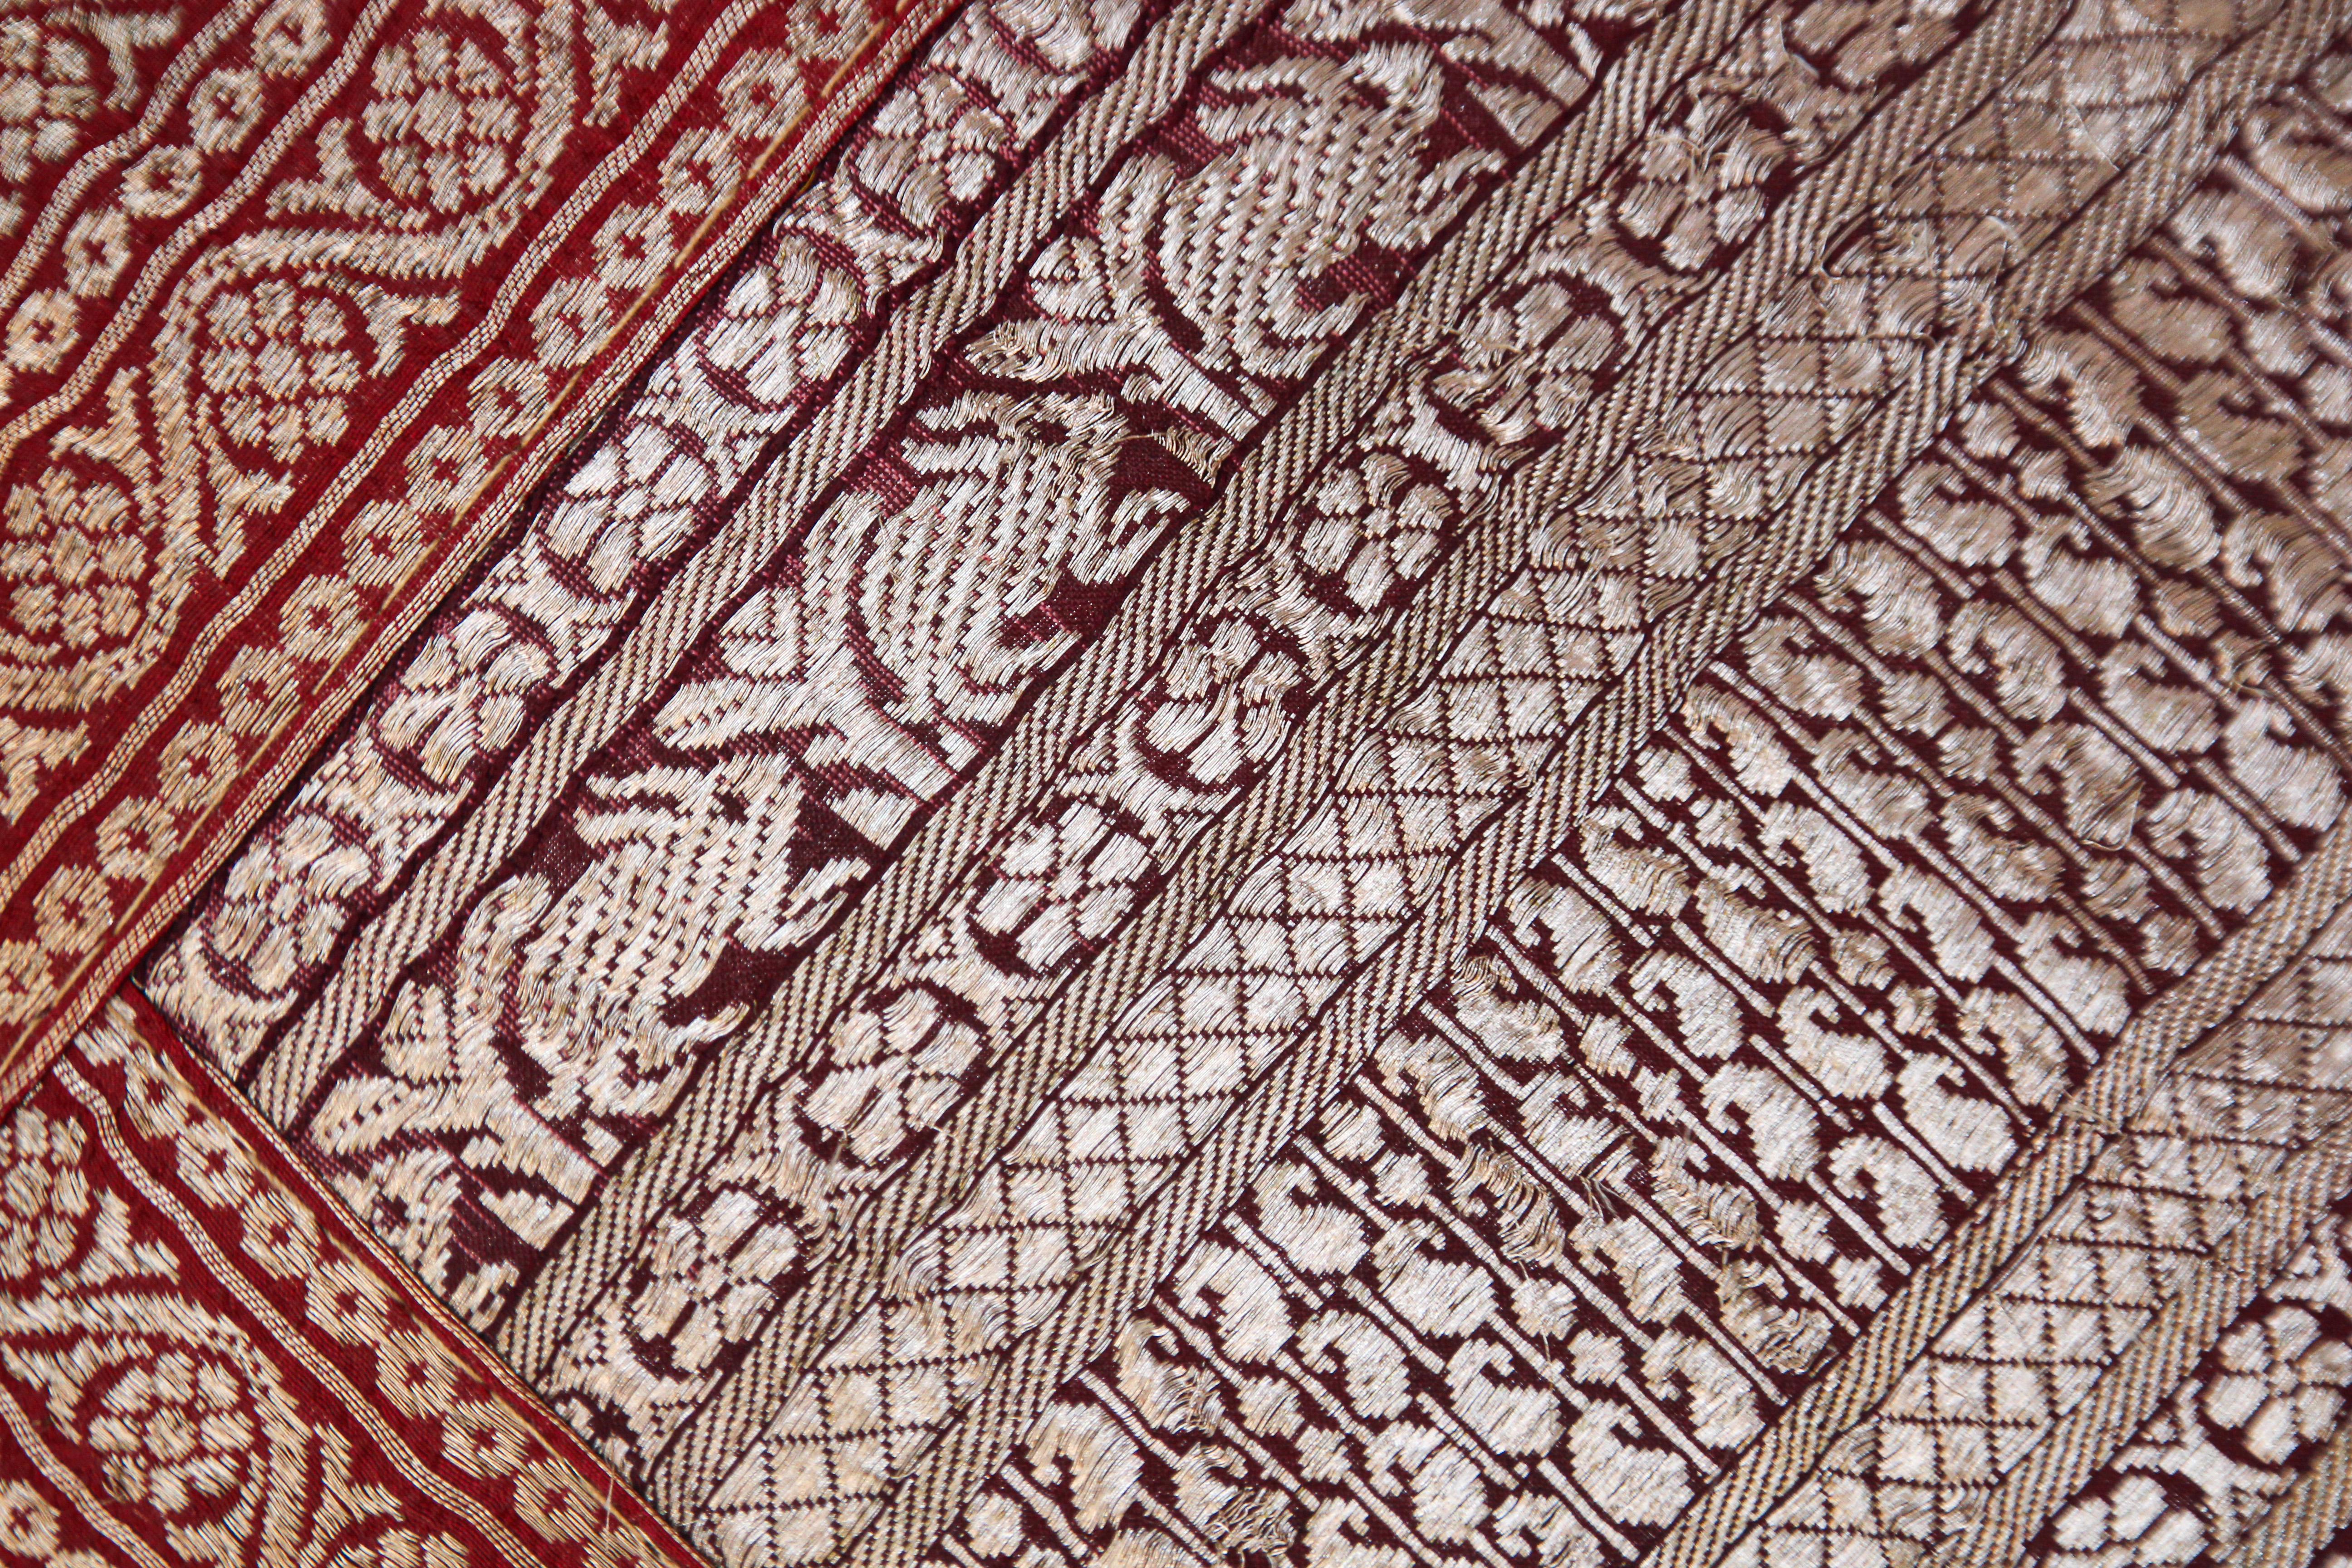 Beaded Decorative Silk Throw Pillow Made from Vintage Sari Borders, India